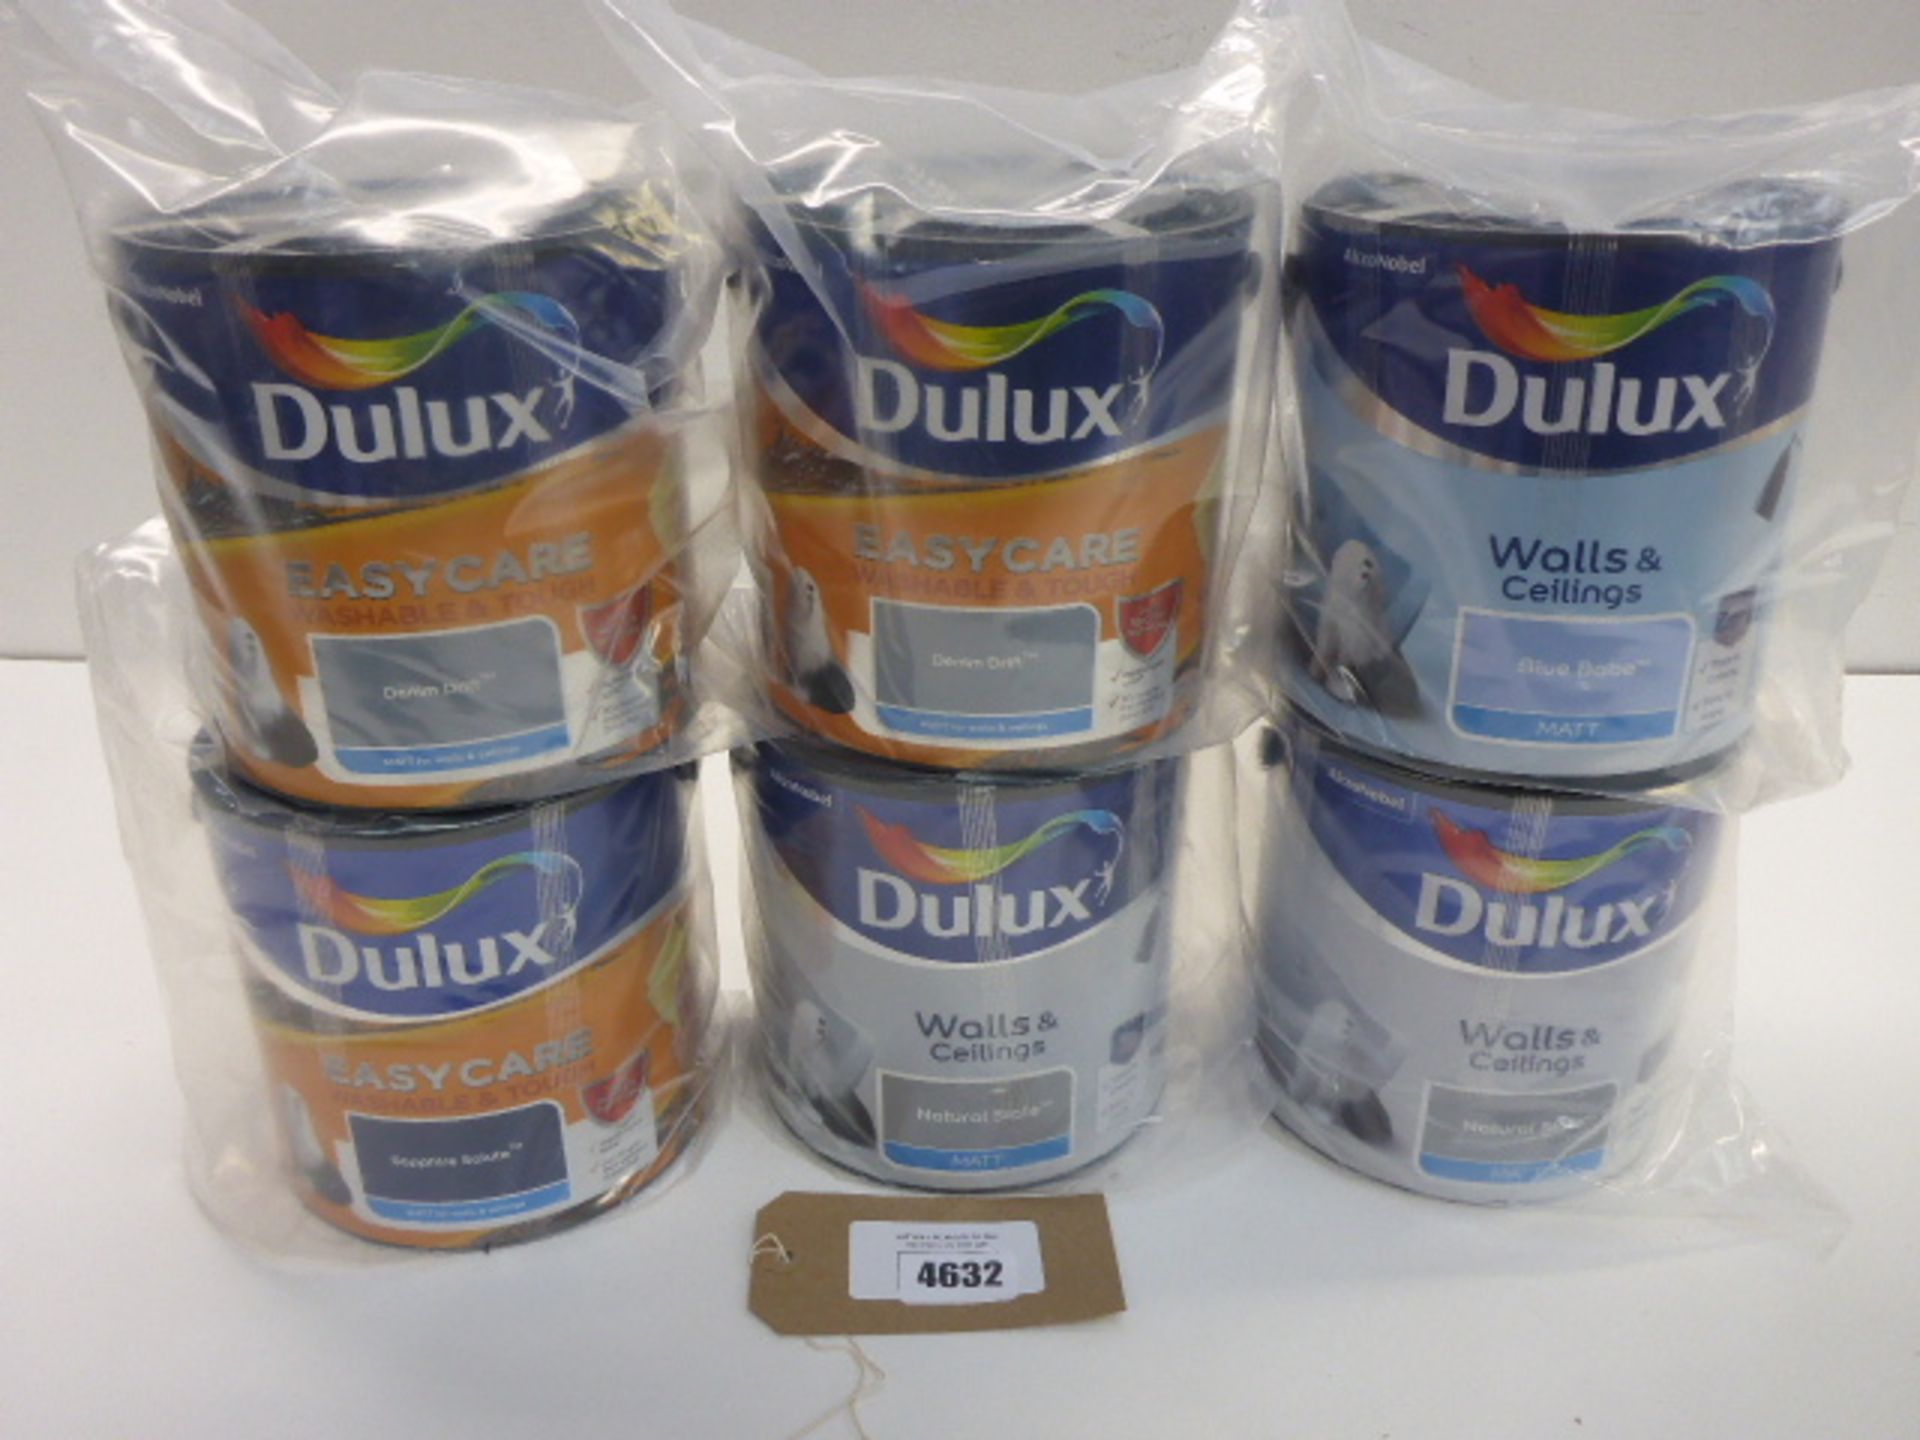 6 x 2.5L cans Dulux Walls & Ceilings & Easycare various shade paints